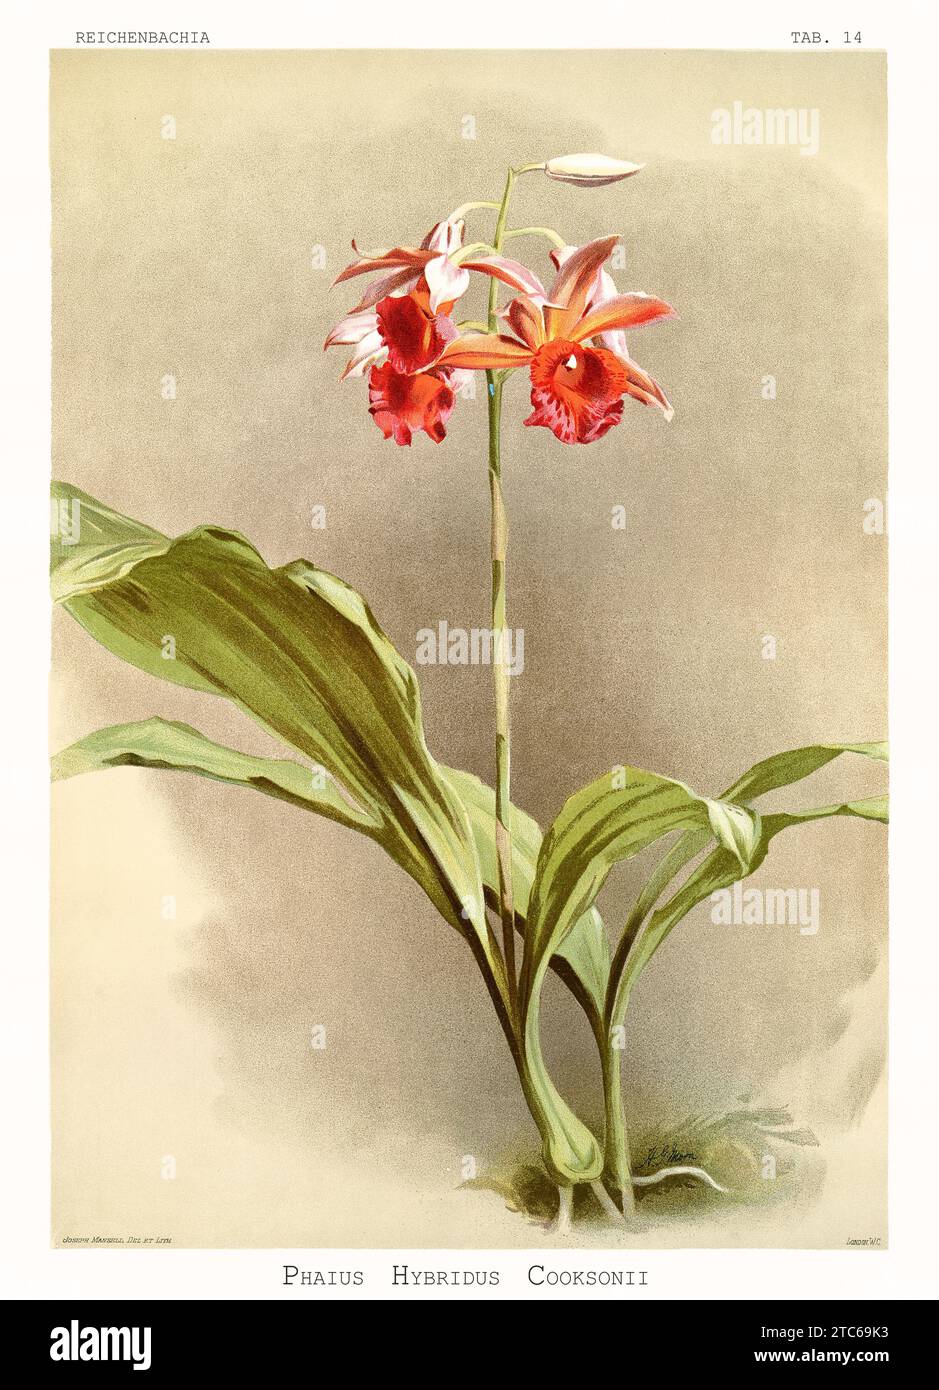 Old illustration of  Phaius hybridus cooksonii. Reichenbachia, by F. Sander. St. Albans, UK, 1888 - 1894 Stock Photo